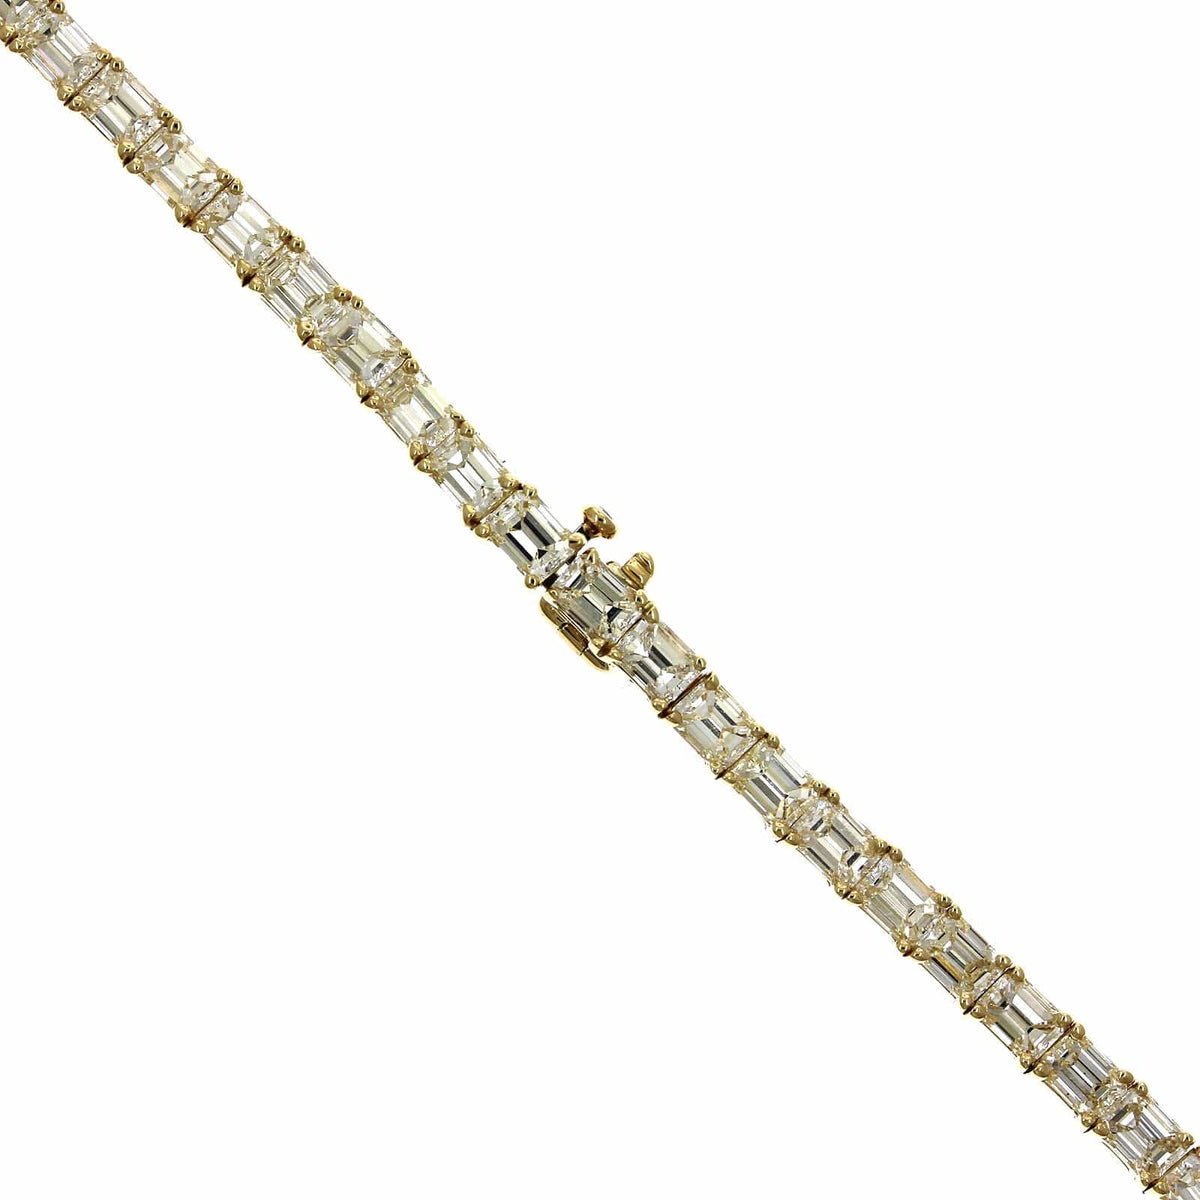 18K Yellow Gold Emerald Cut Diamond Line Necklace, 18k yellow gold, Long's Jewelers